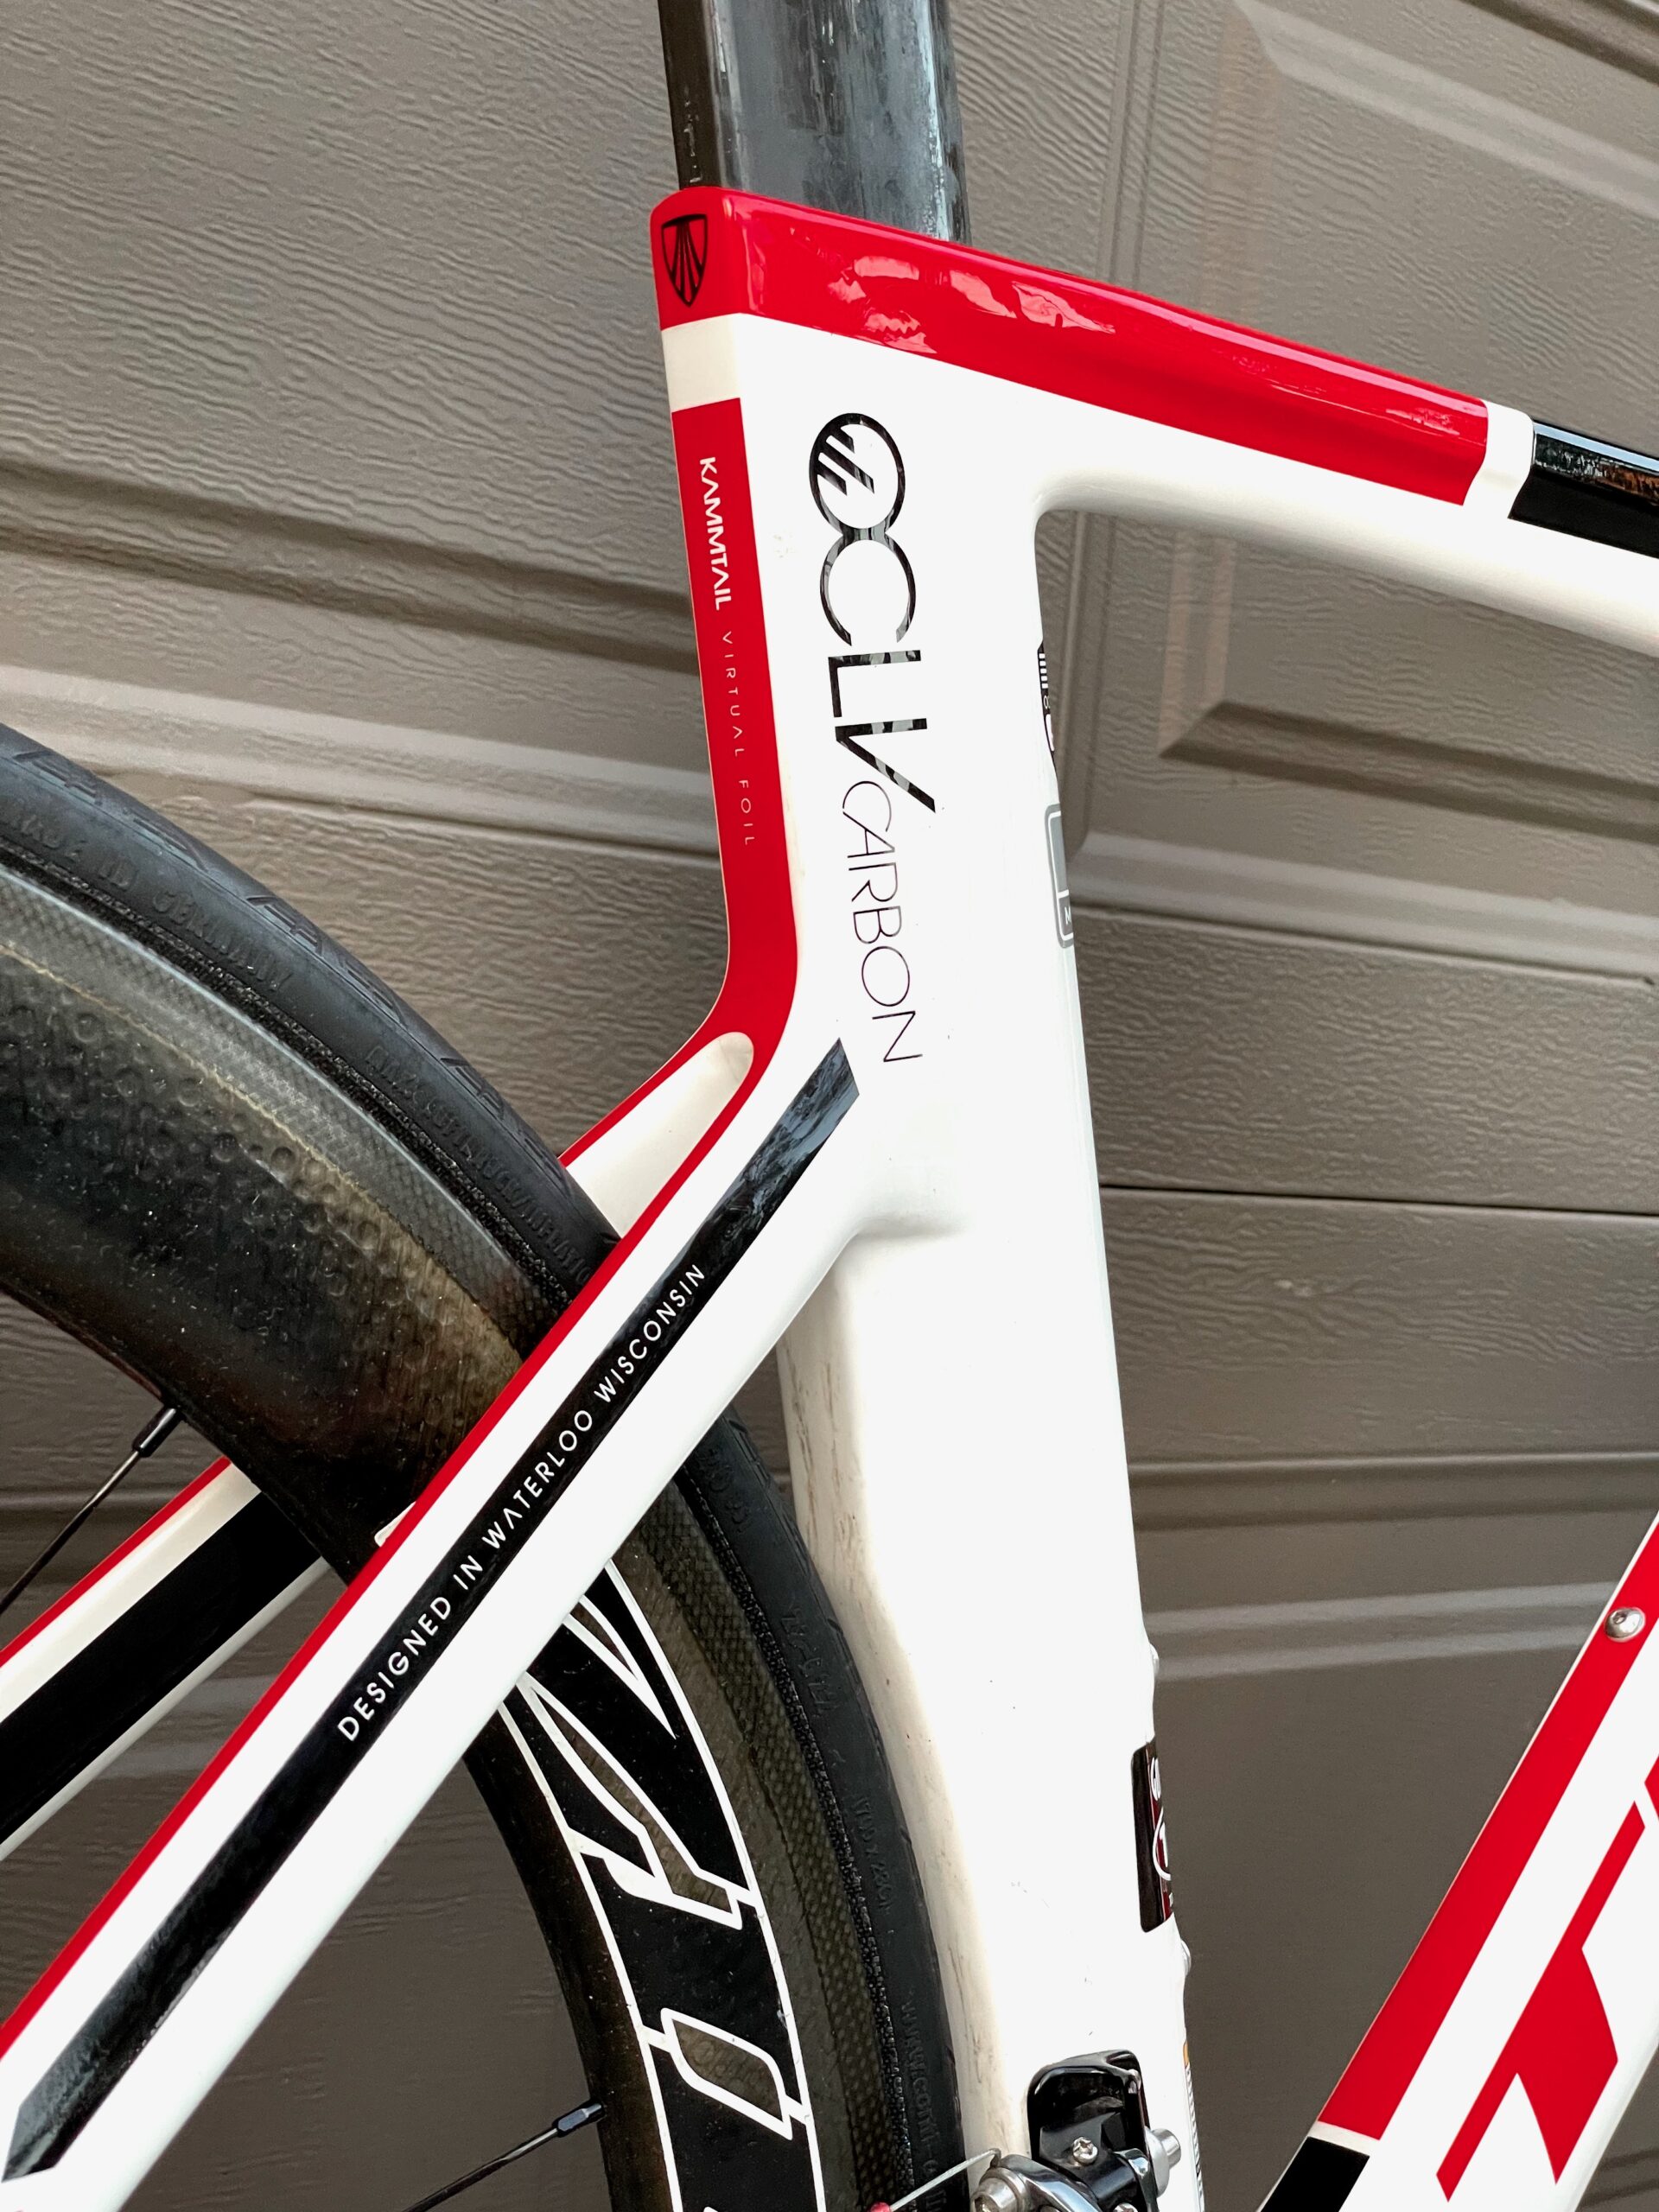 Trek Speed Concept Full Carbon TT Triathlon Bike SRAM Force w/ Carbon Wheels - M